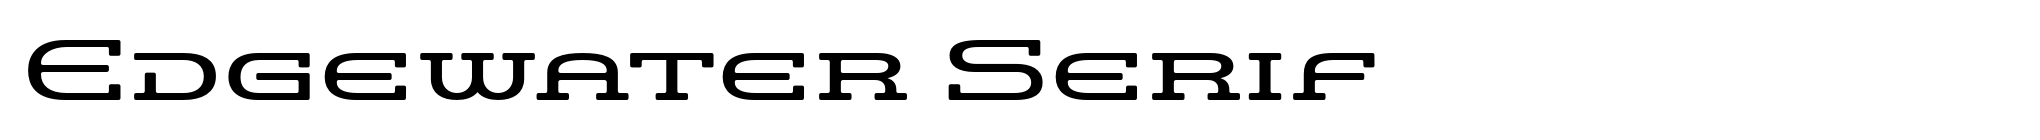 Edgewater Serif image